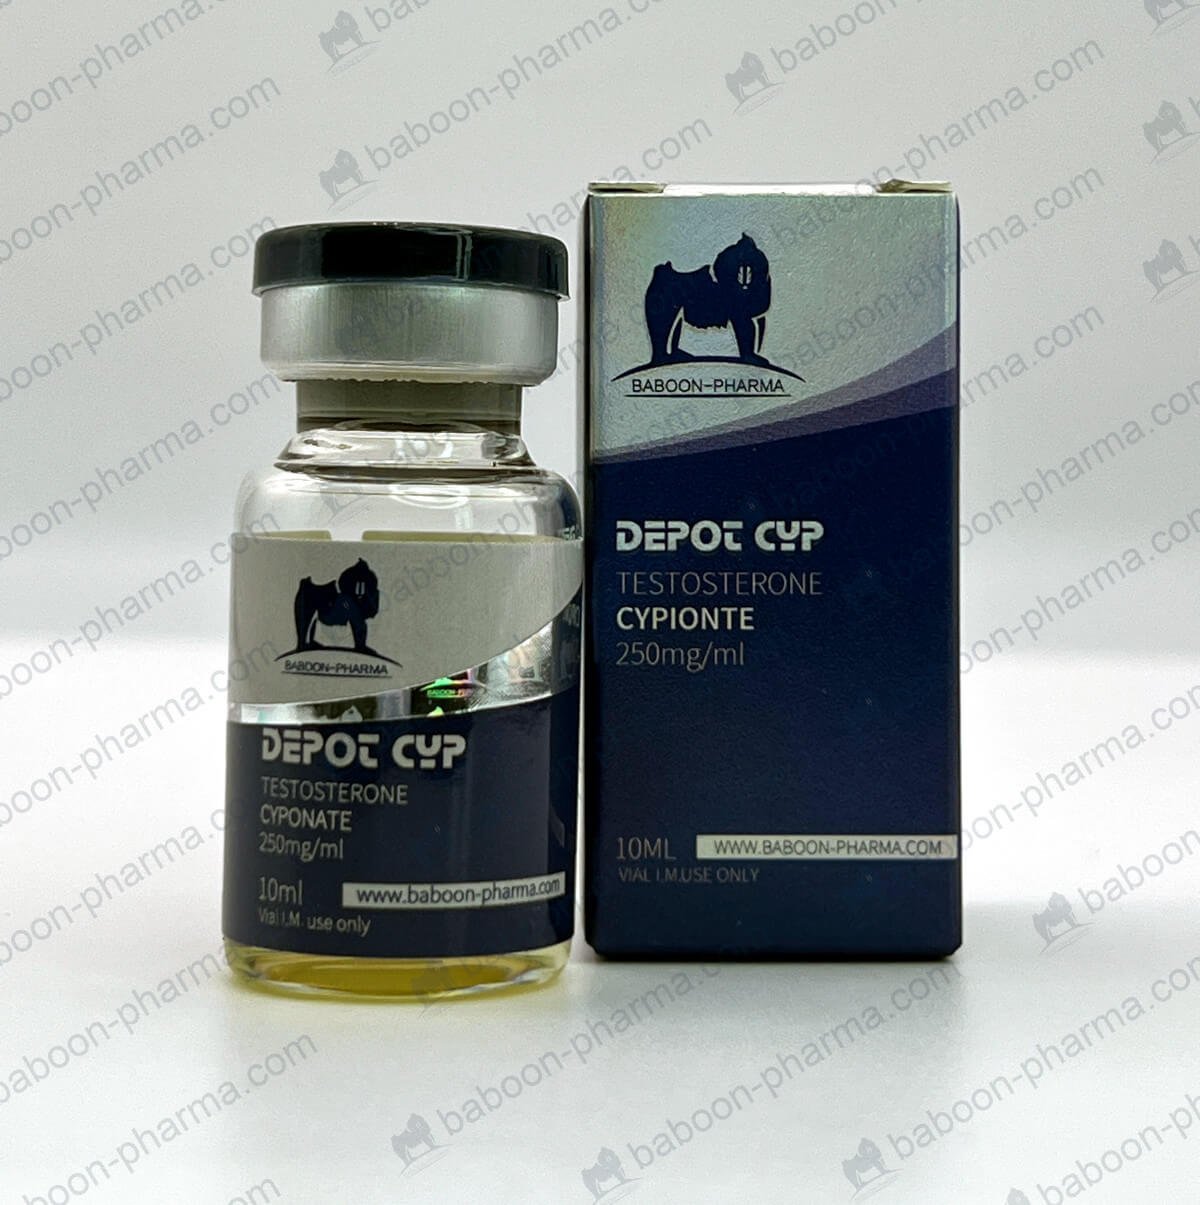 Pavián-Pharma-Oil_Depot_CYP_1